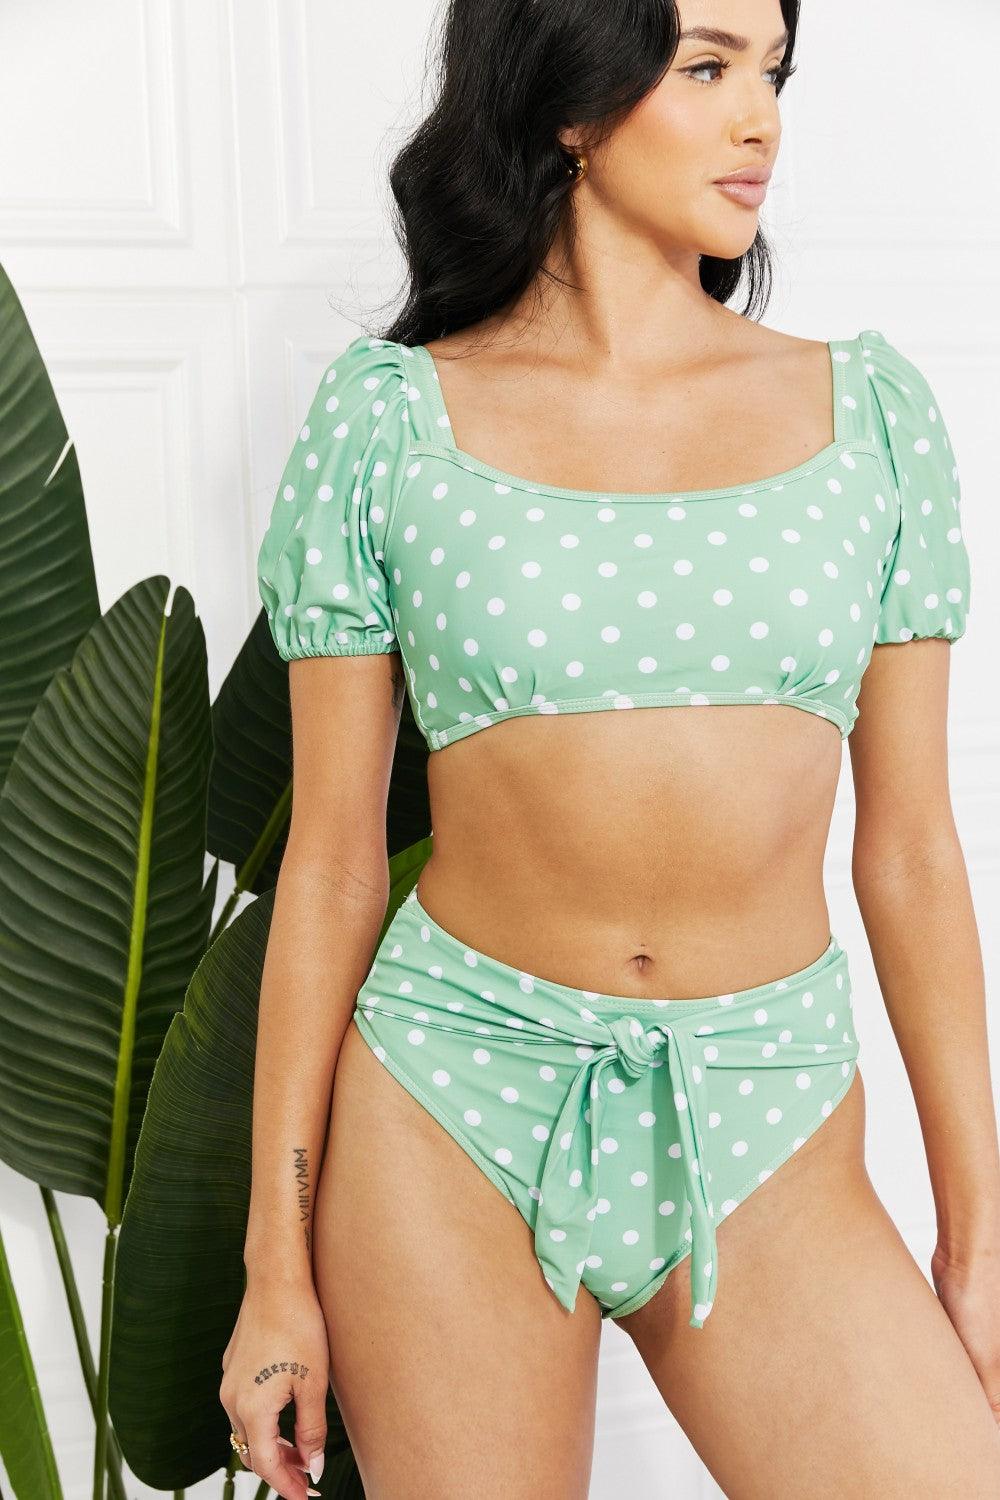 Marina West Swim Vacay Ready Puff Sleeve Bikini in Gum Leaf - Stuffed Cart